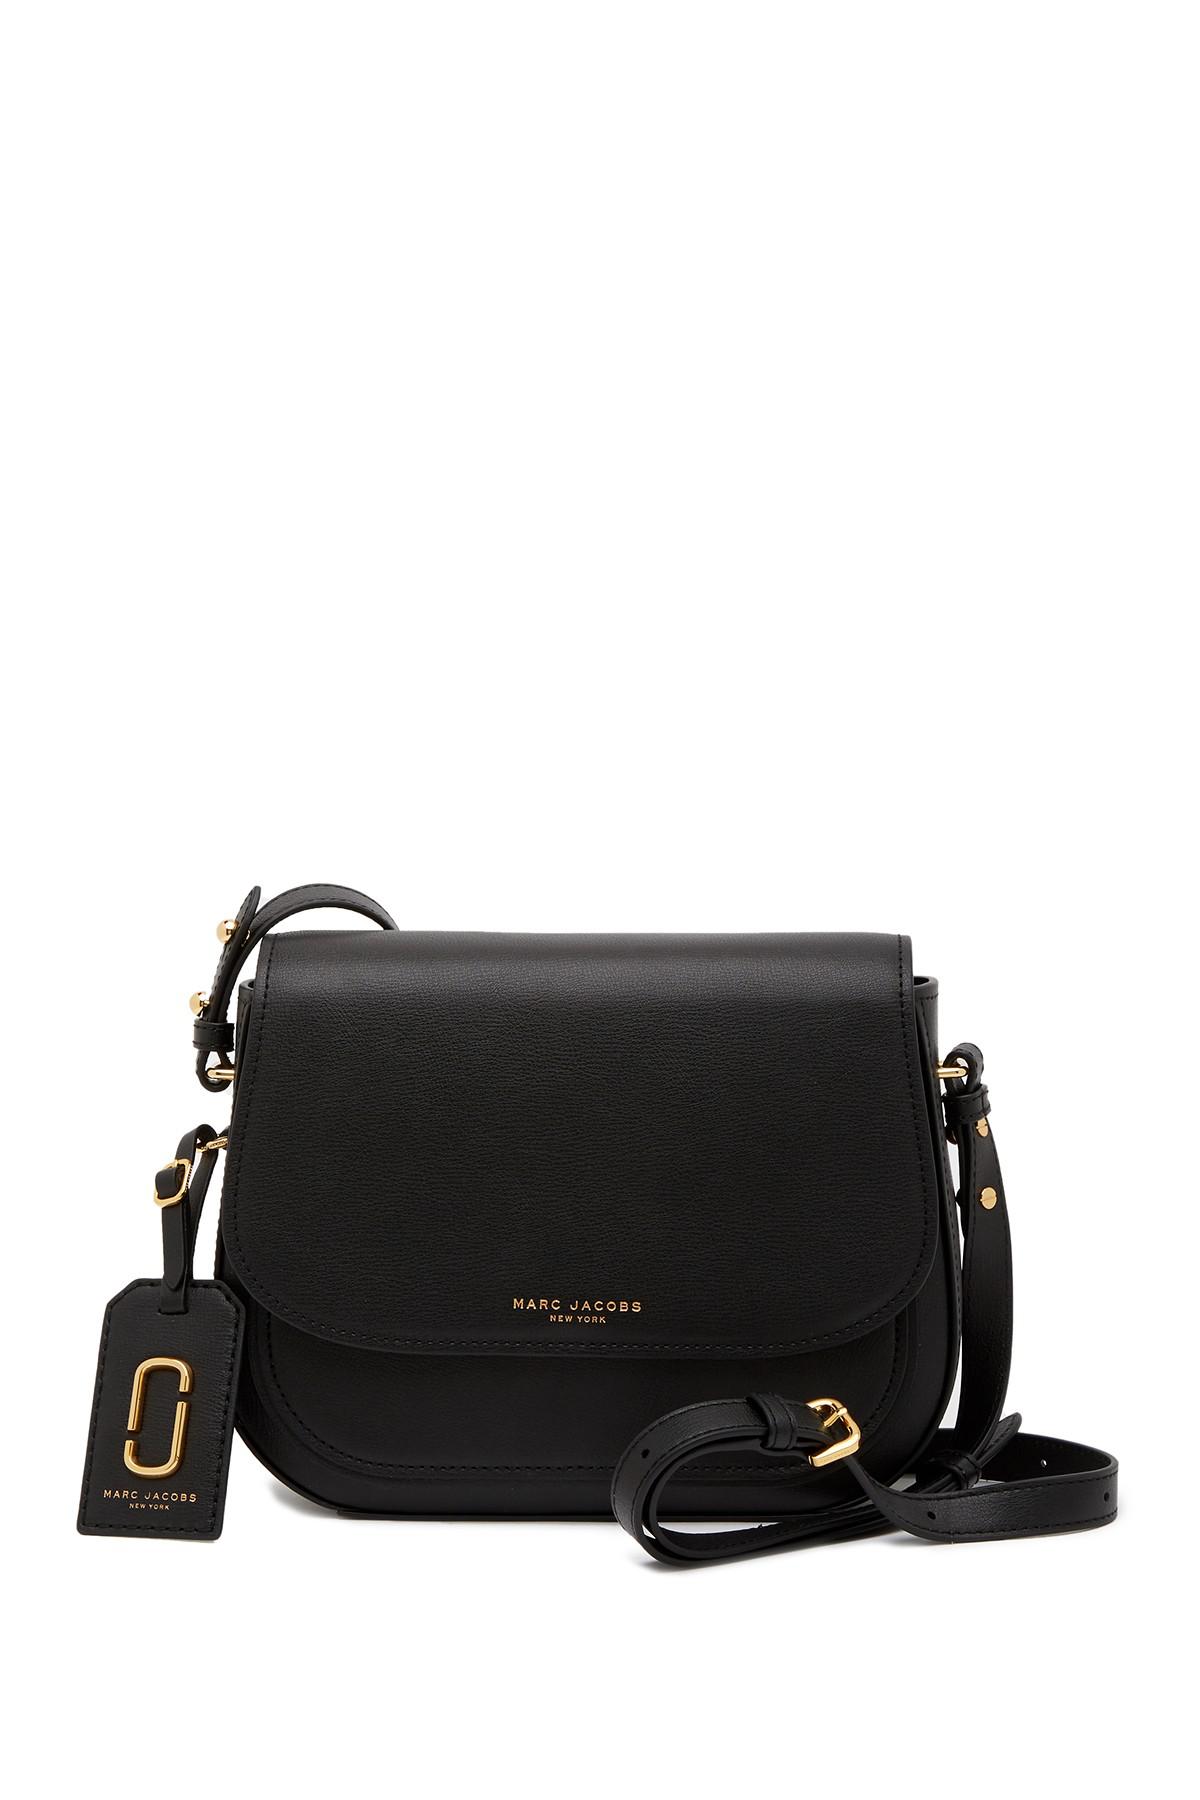 Marc Jacobs New York Crossbody Purse Handbag Black Leather Small